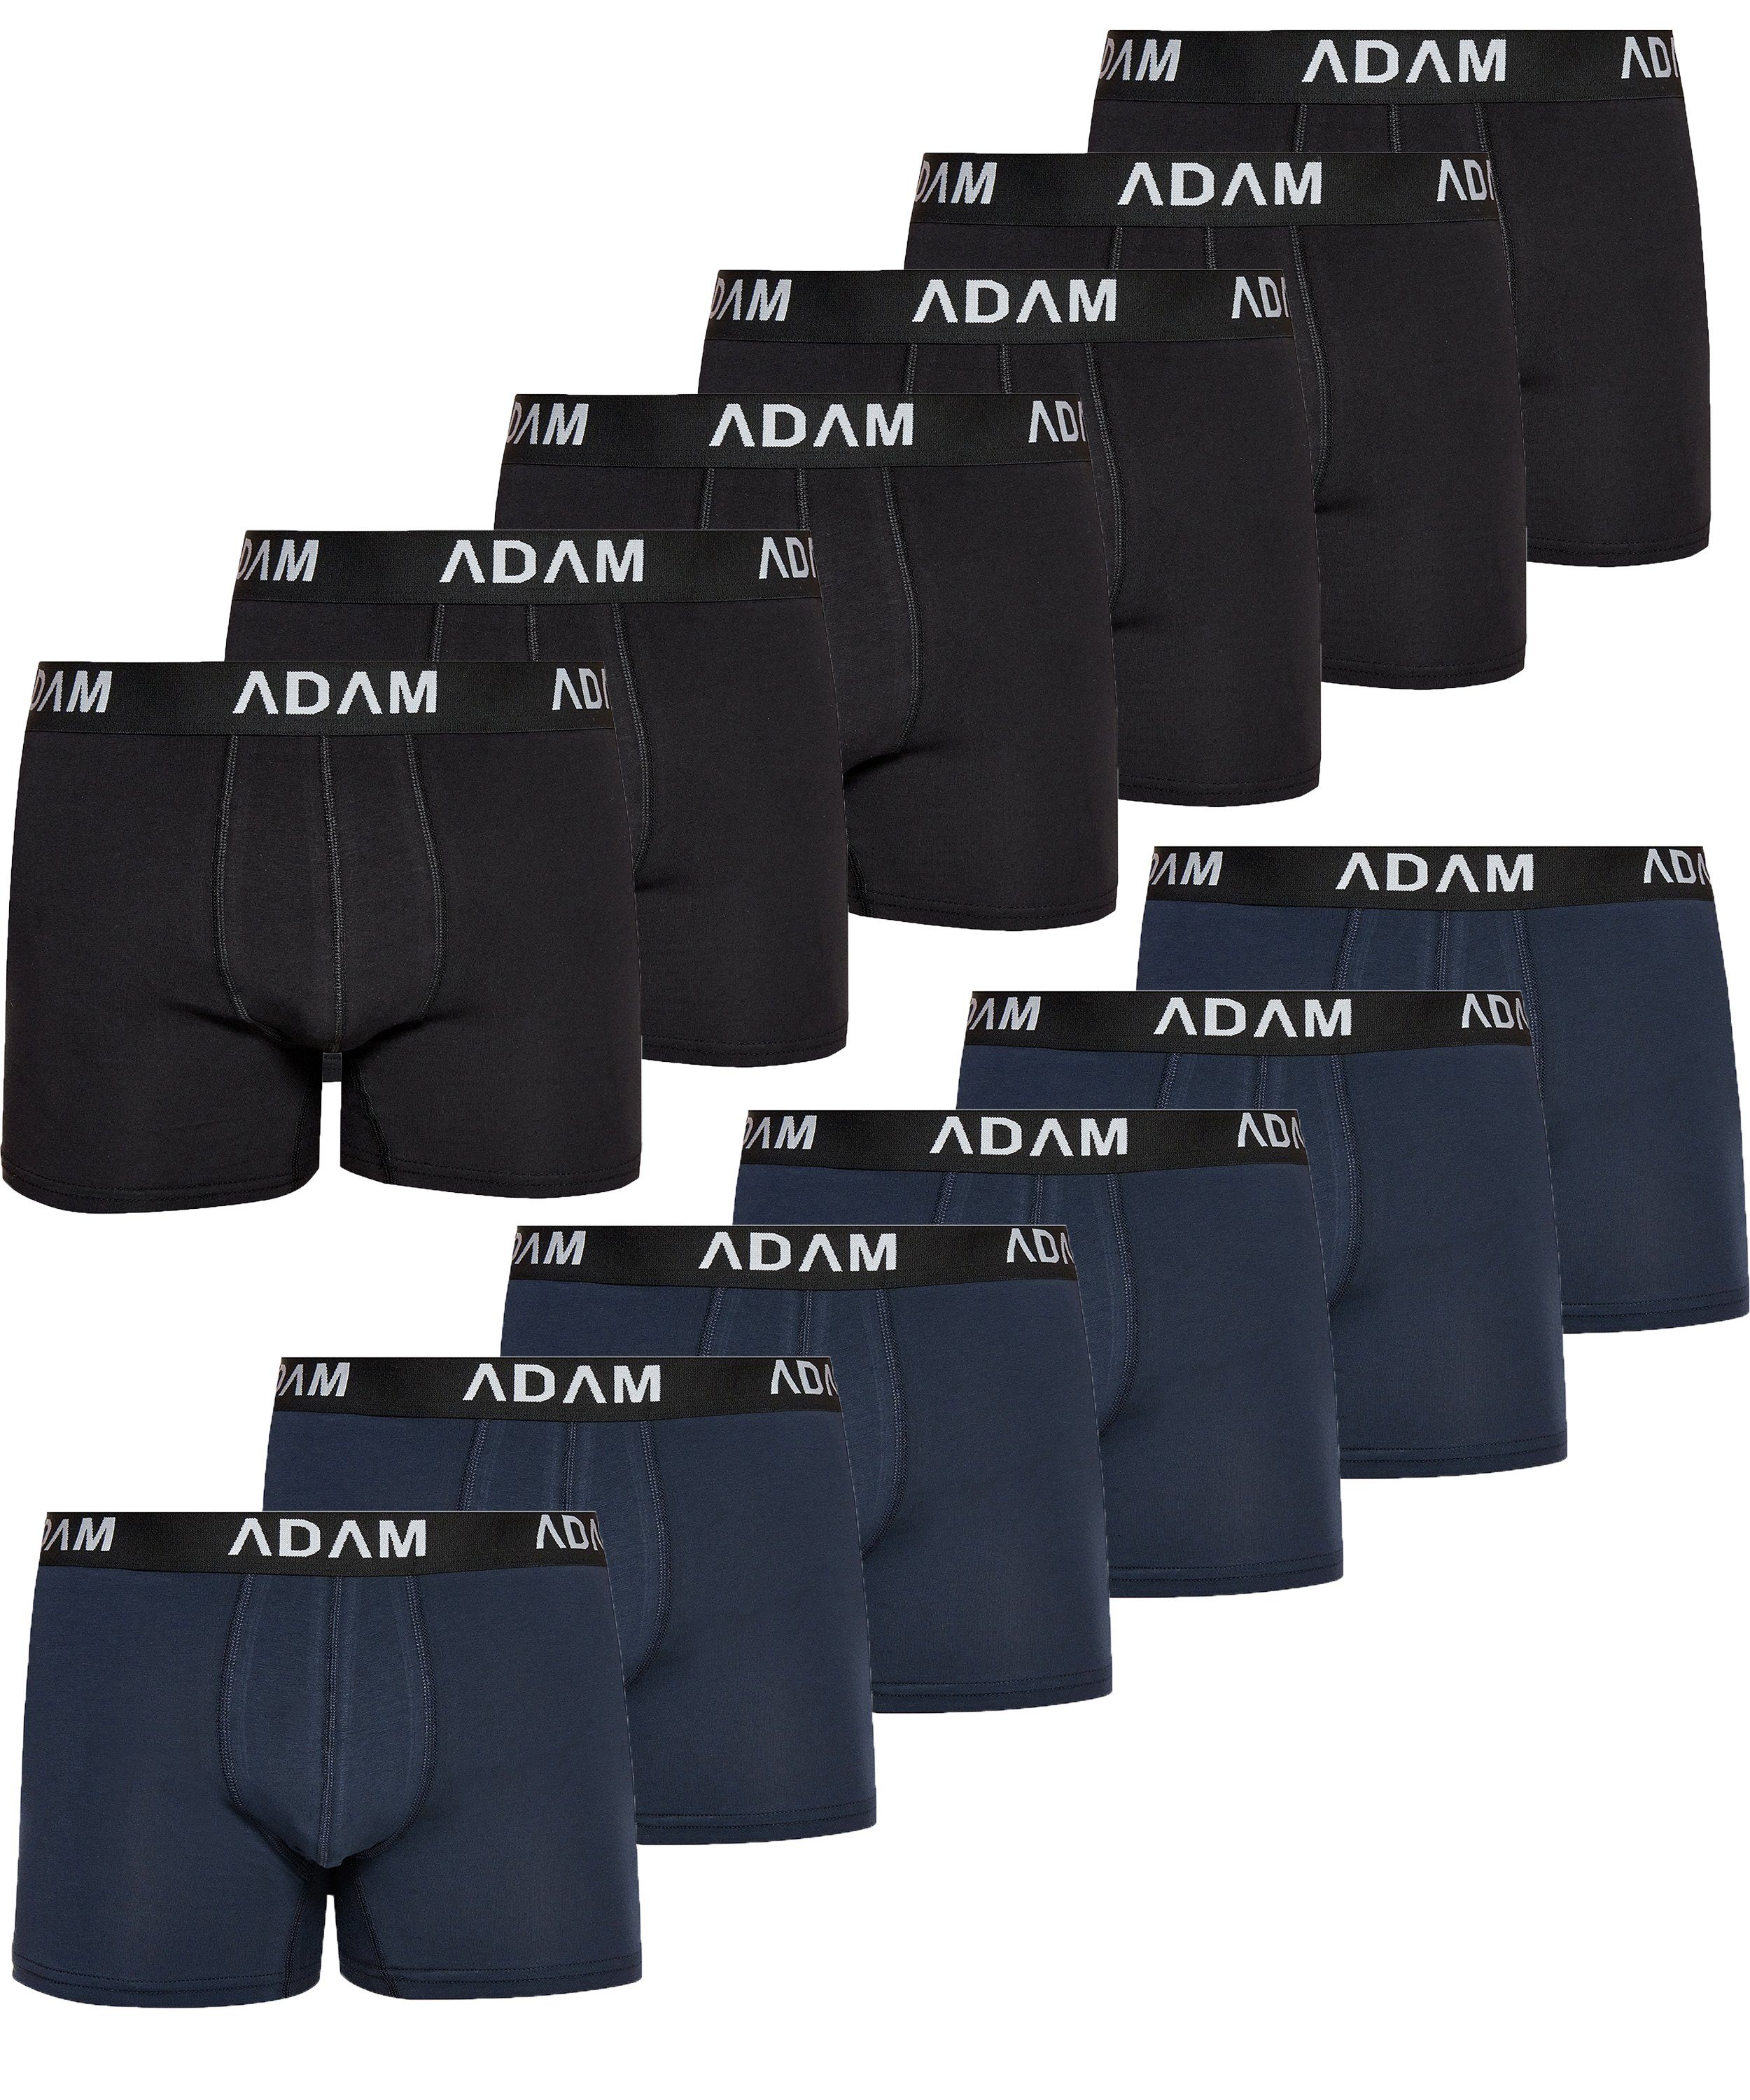 ADAM JEANS Boxershorts Boxer-1 (12-St., 6er Set, 8er Set, 10er Set, 12er Set) Boxershorts Herren Boxer Shorts Männer Unterhosen Trunks Underwear 12er Set Box-D